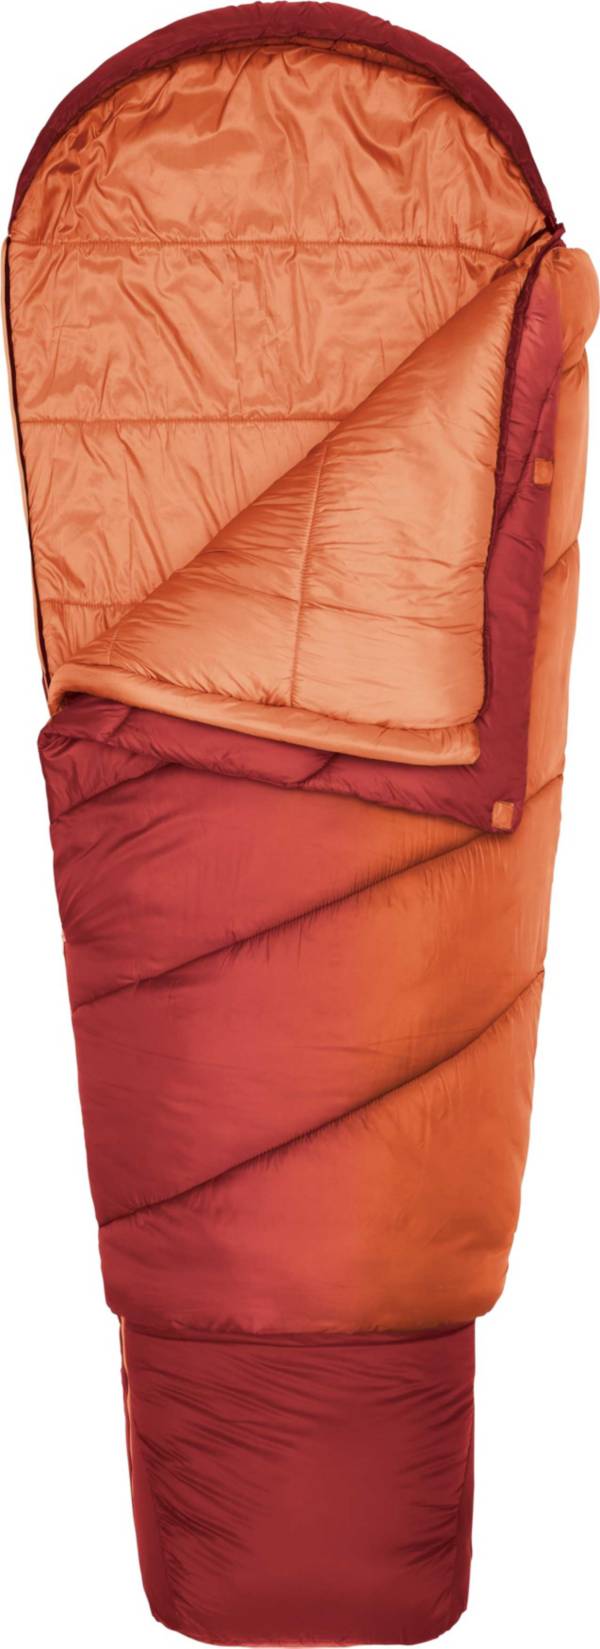 Quest Multi-Temp 30-10 Sleeping Bag product image